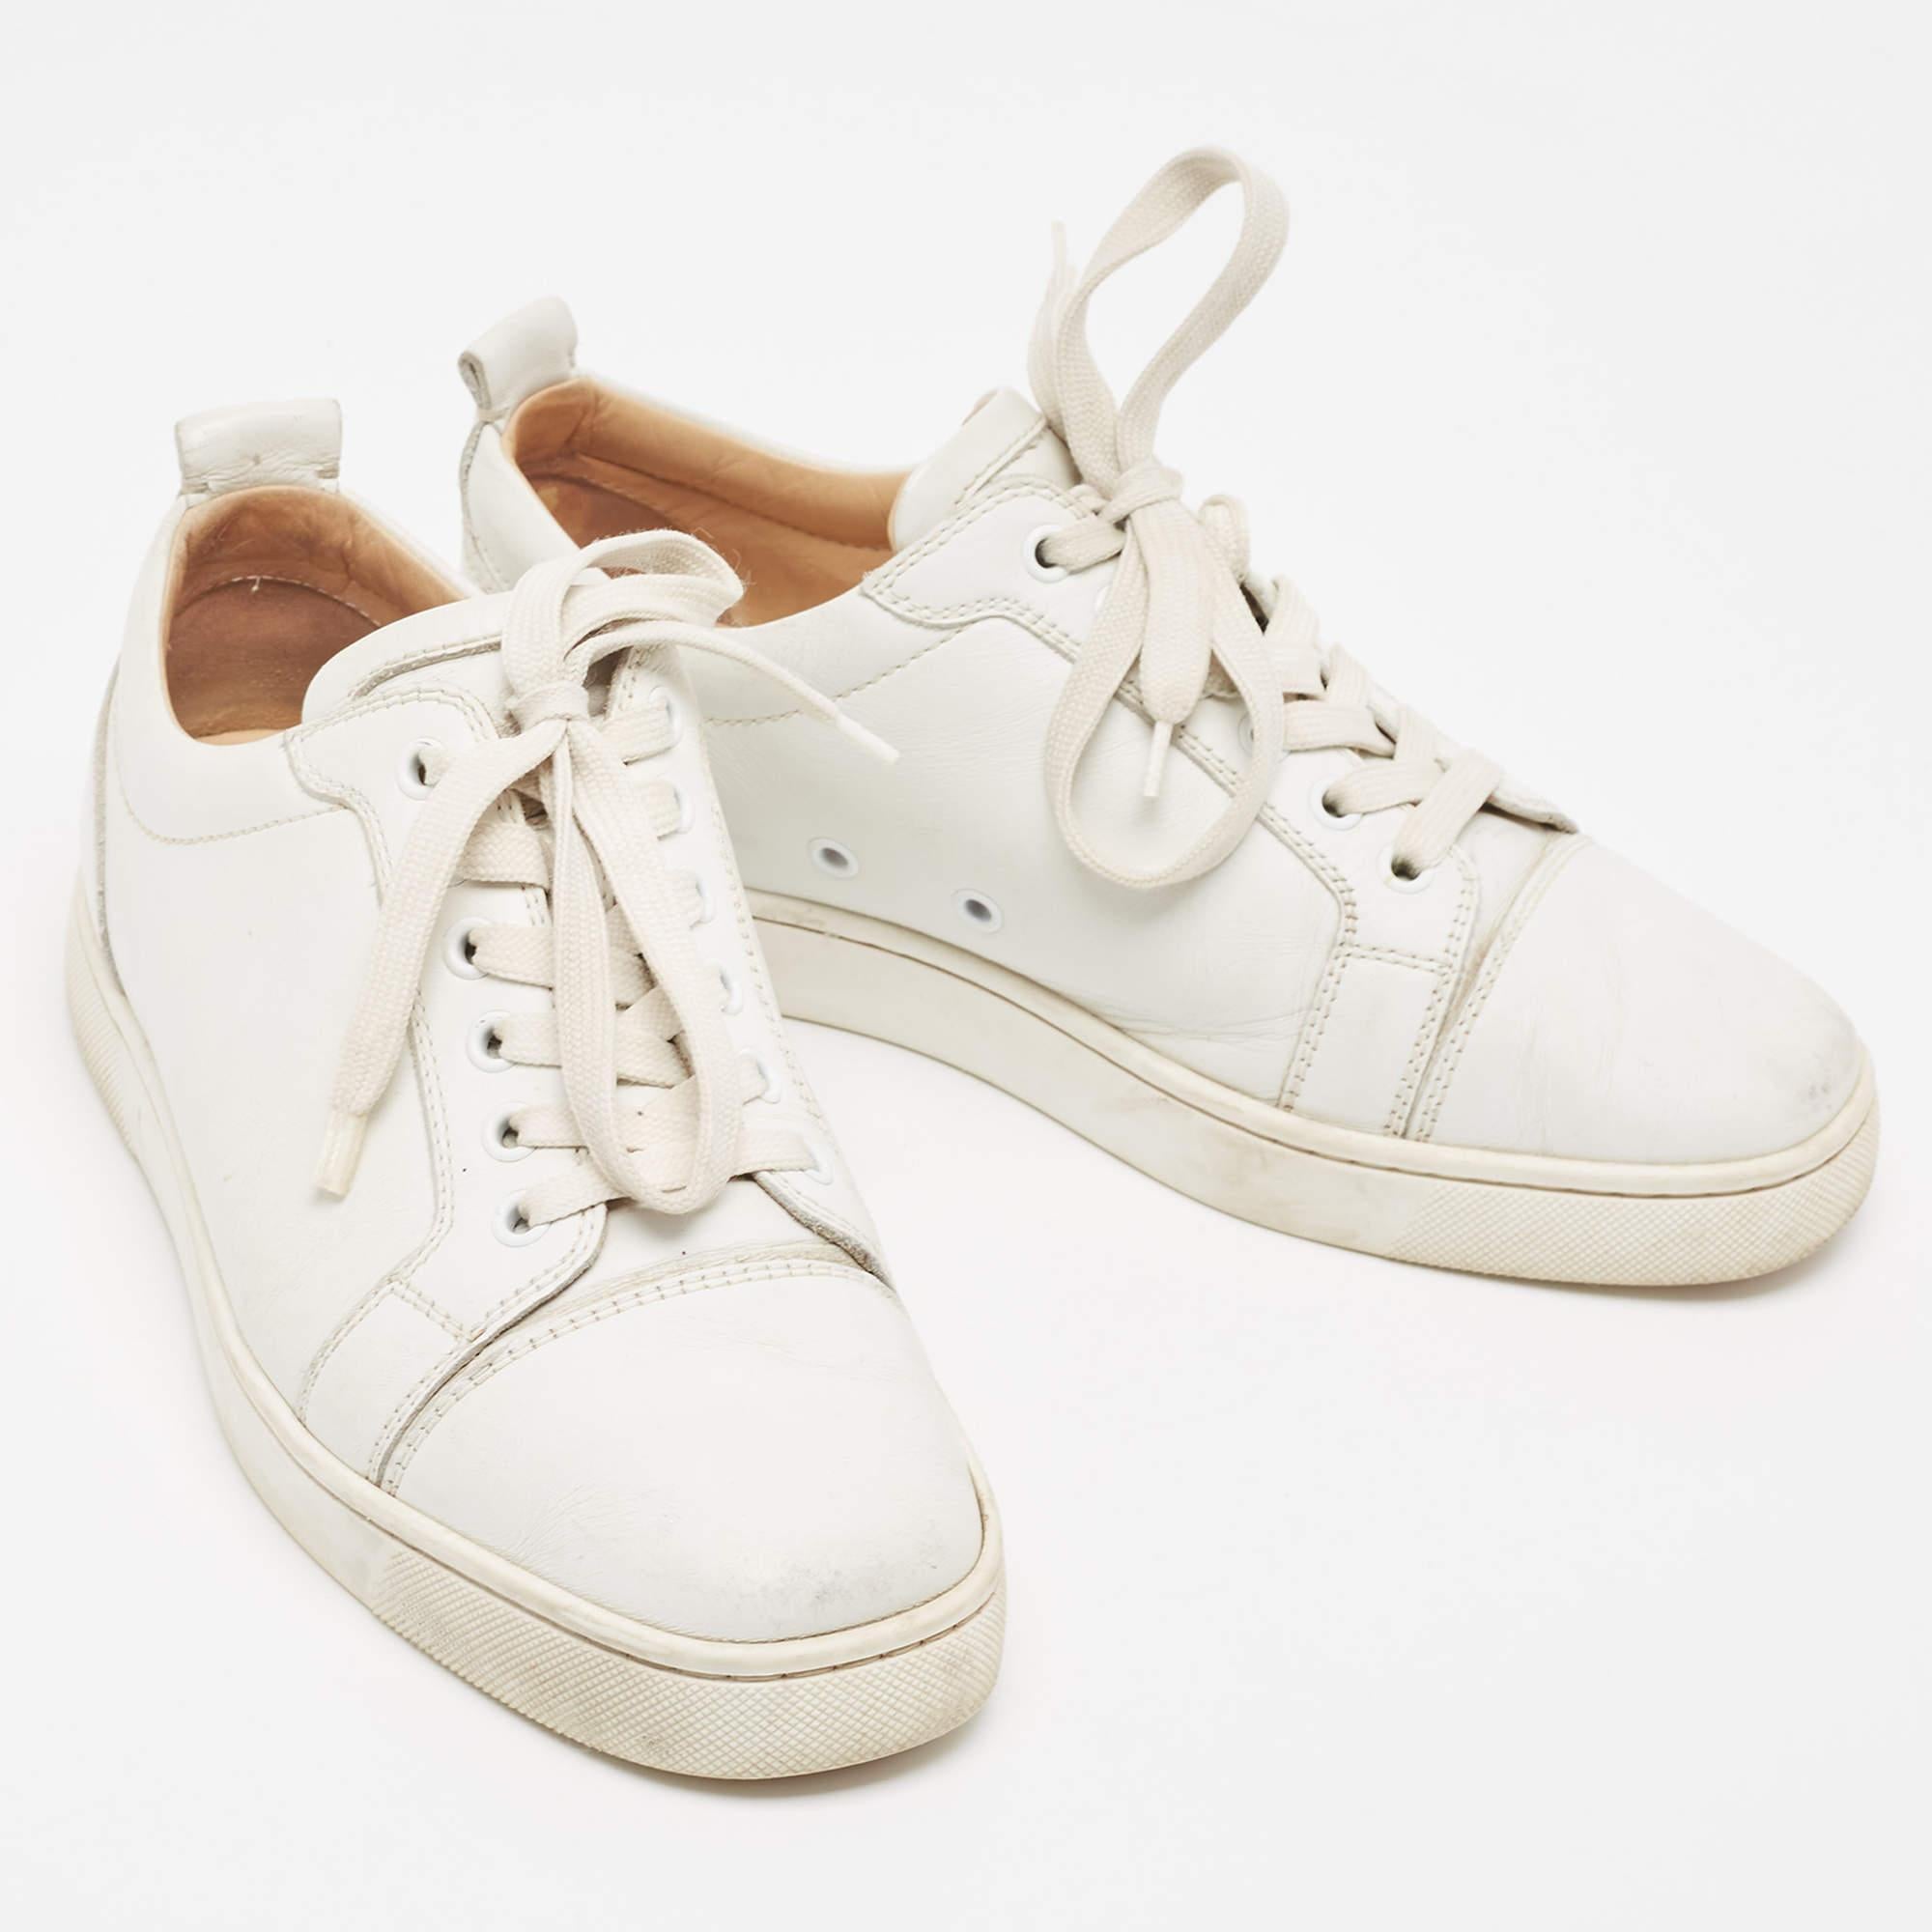 Christian Louboutin White Leather Vieira Low Top Sneakers Size 39 In Good Condition For Sale In Dubai, Al Qouz 2